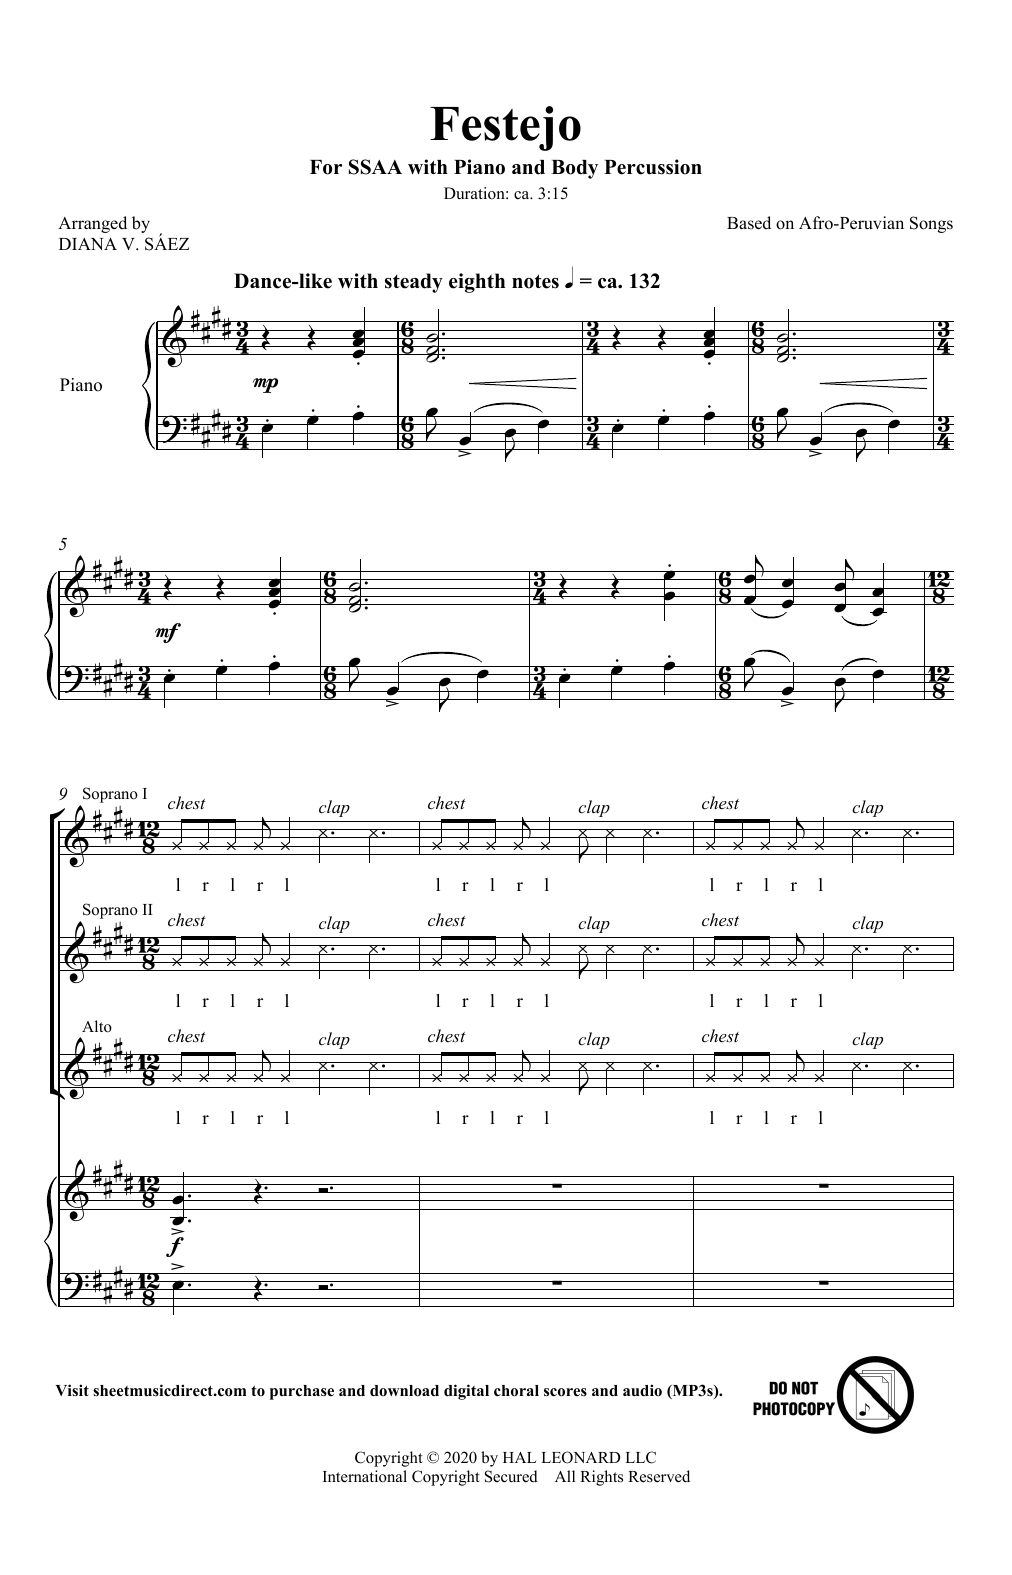 Diana Saez Festejo Sheet Music Notes & Chords for SSA Choir - Download or Print PDF